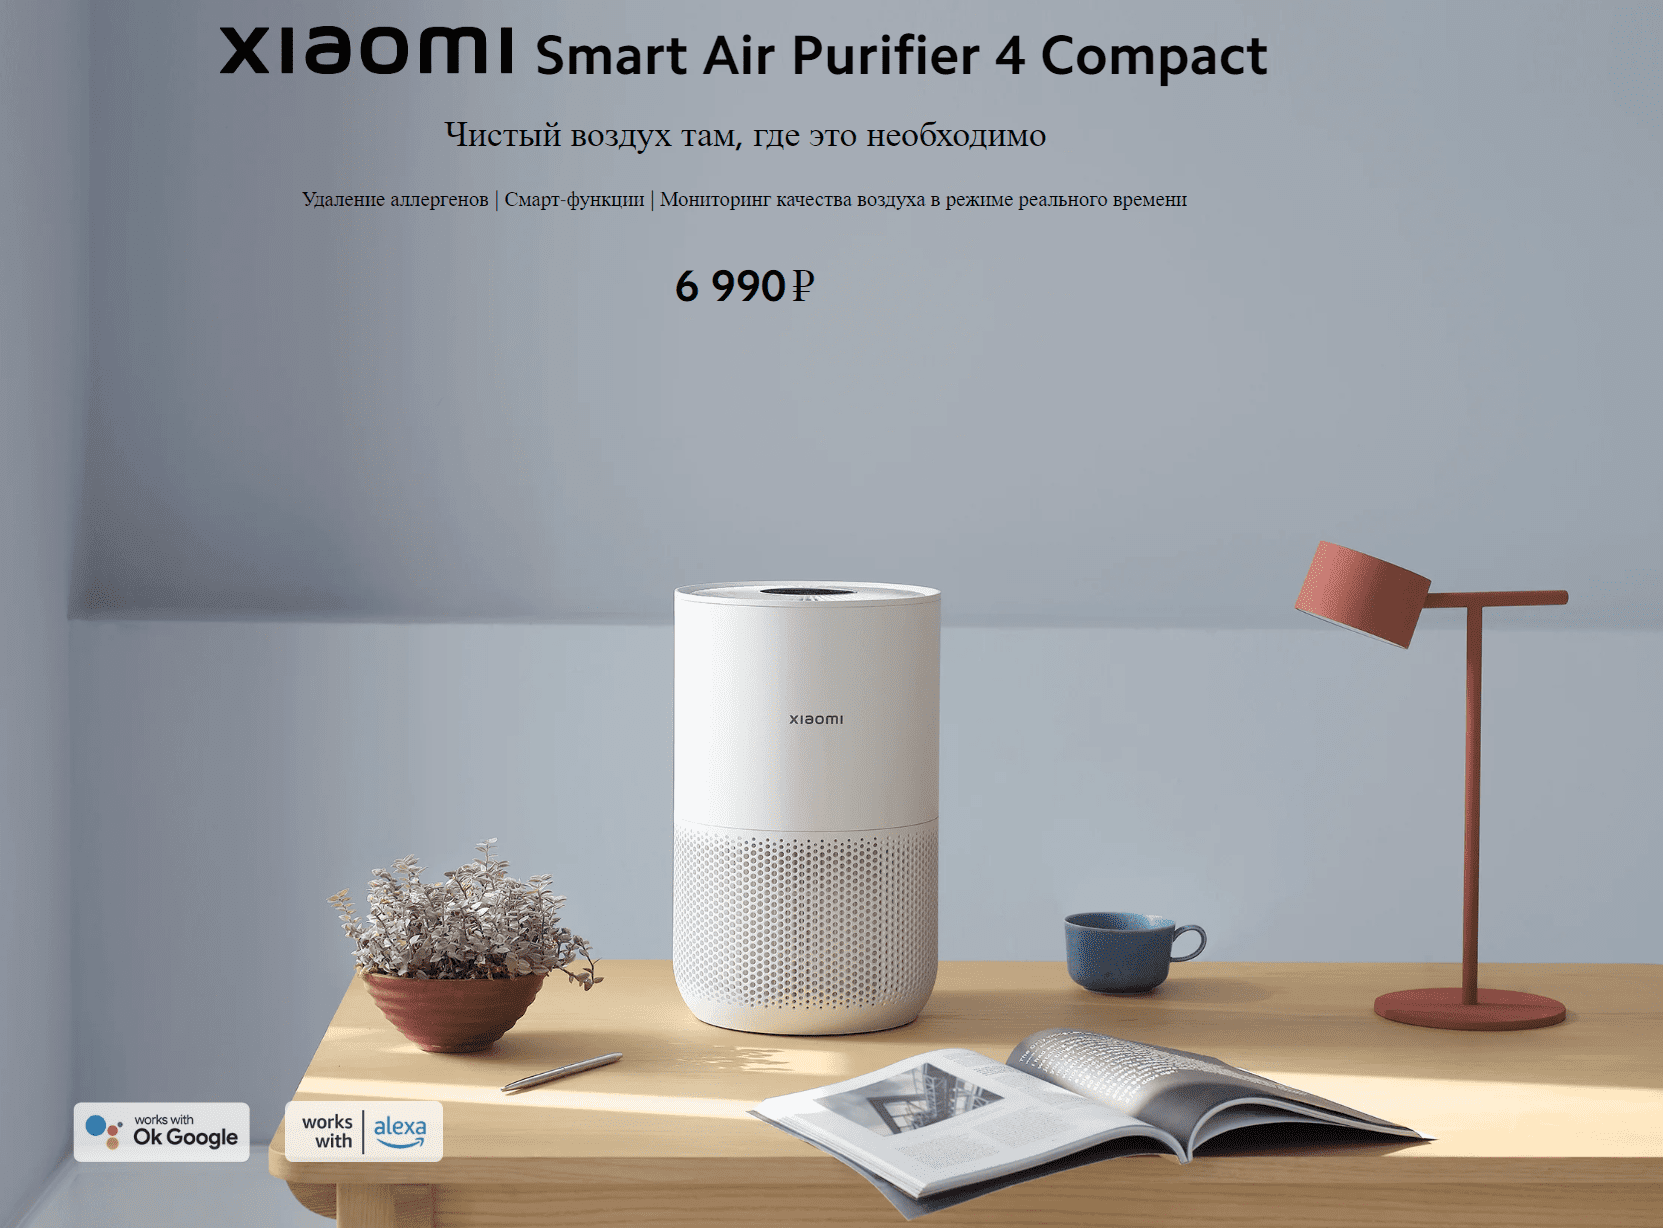 Xiaomi smart air purifier 4 eu. Очиститель воздуха Xiaomi Smart Air Purifier 4 Compact. Фильтр для очиститель воздуха Xiaomi (mi) Smart Air Purifier 4 Compact Global AC-m18-SC. Умный очиститель воздуха Xiaomi Mijia Air Purifier 4 Pro h (AC-m23-SC). Воздухоочиститель Xiaomi Smart Air отличия по квадратной.